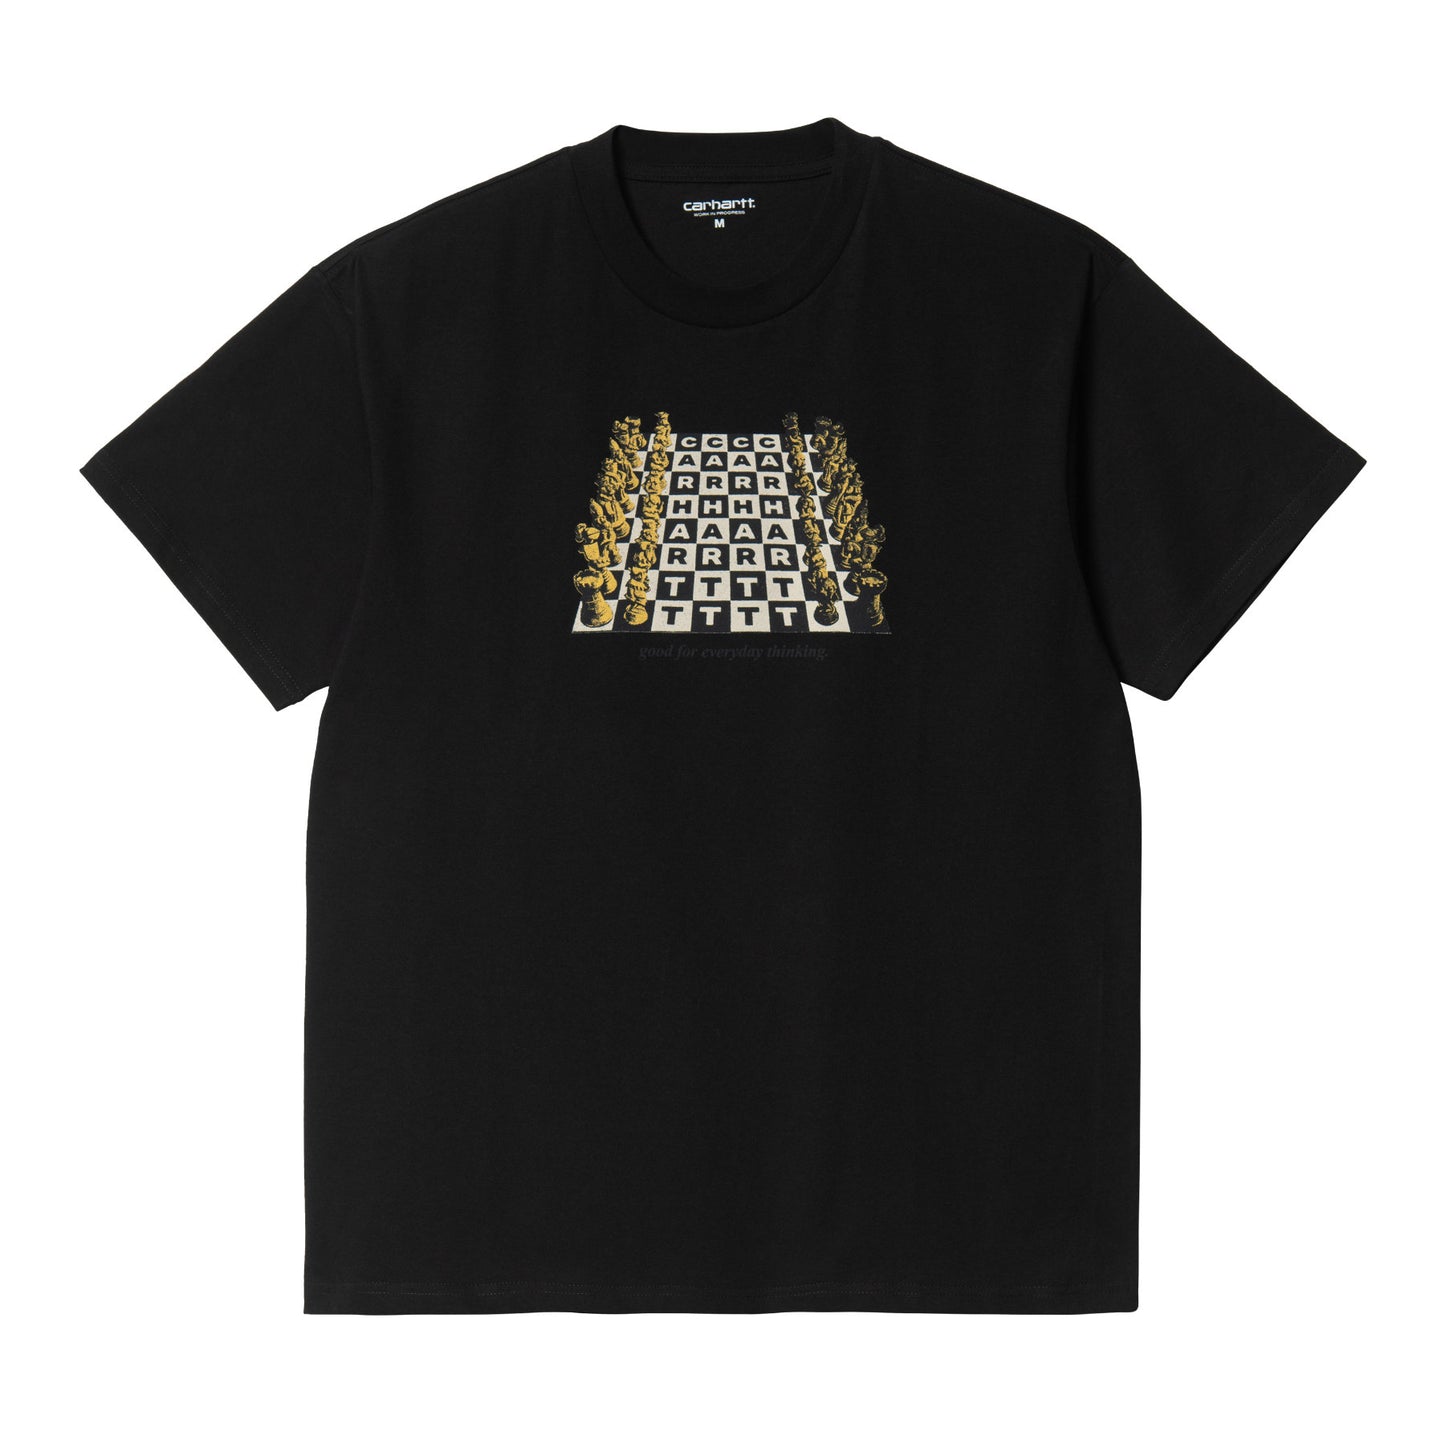 Carhartt WIP Chessboard T-Shirt Black. Foto de frente.